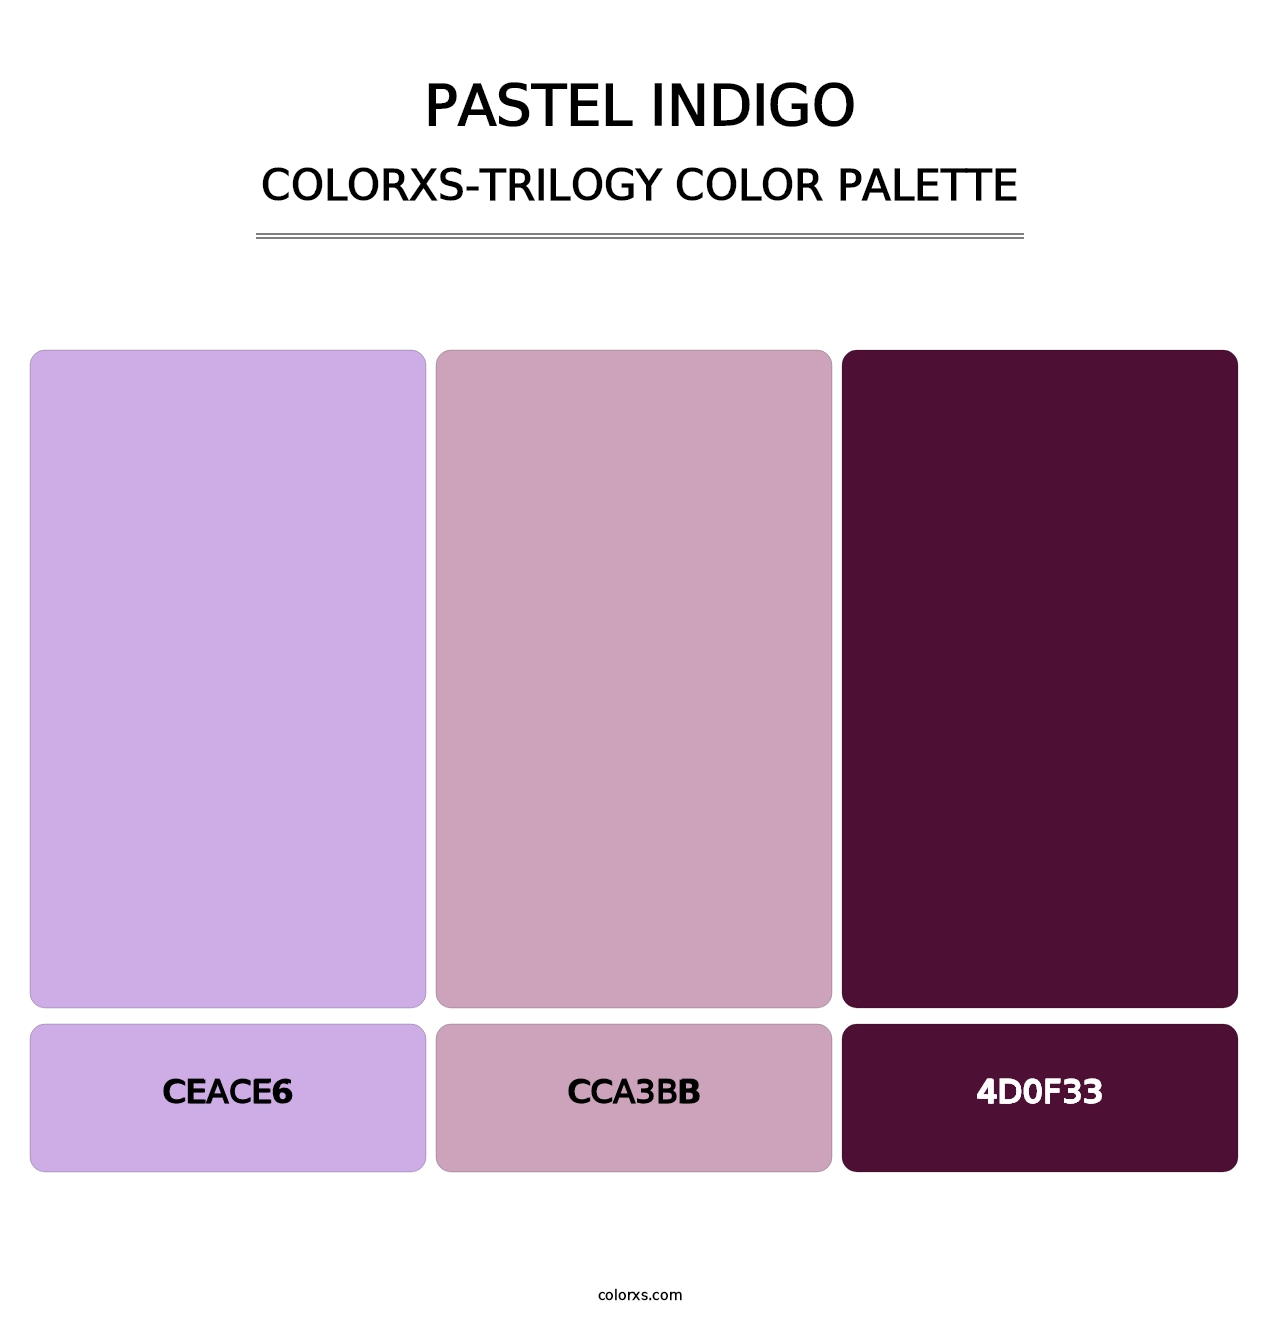 Pastel Indigo - Colorxs Trilogy Palette